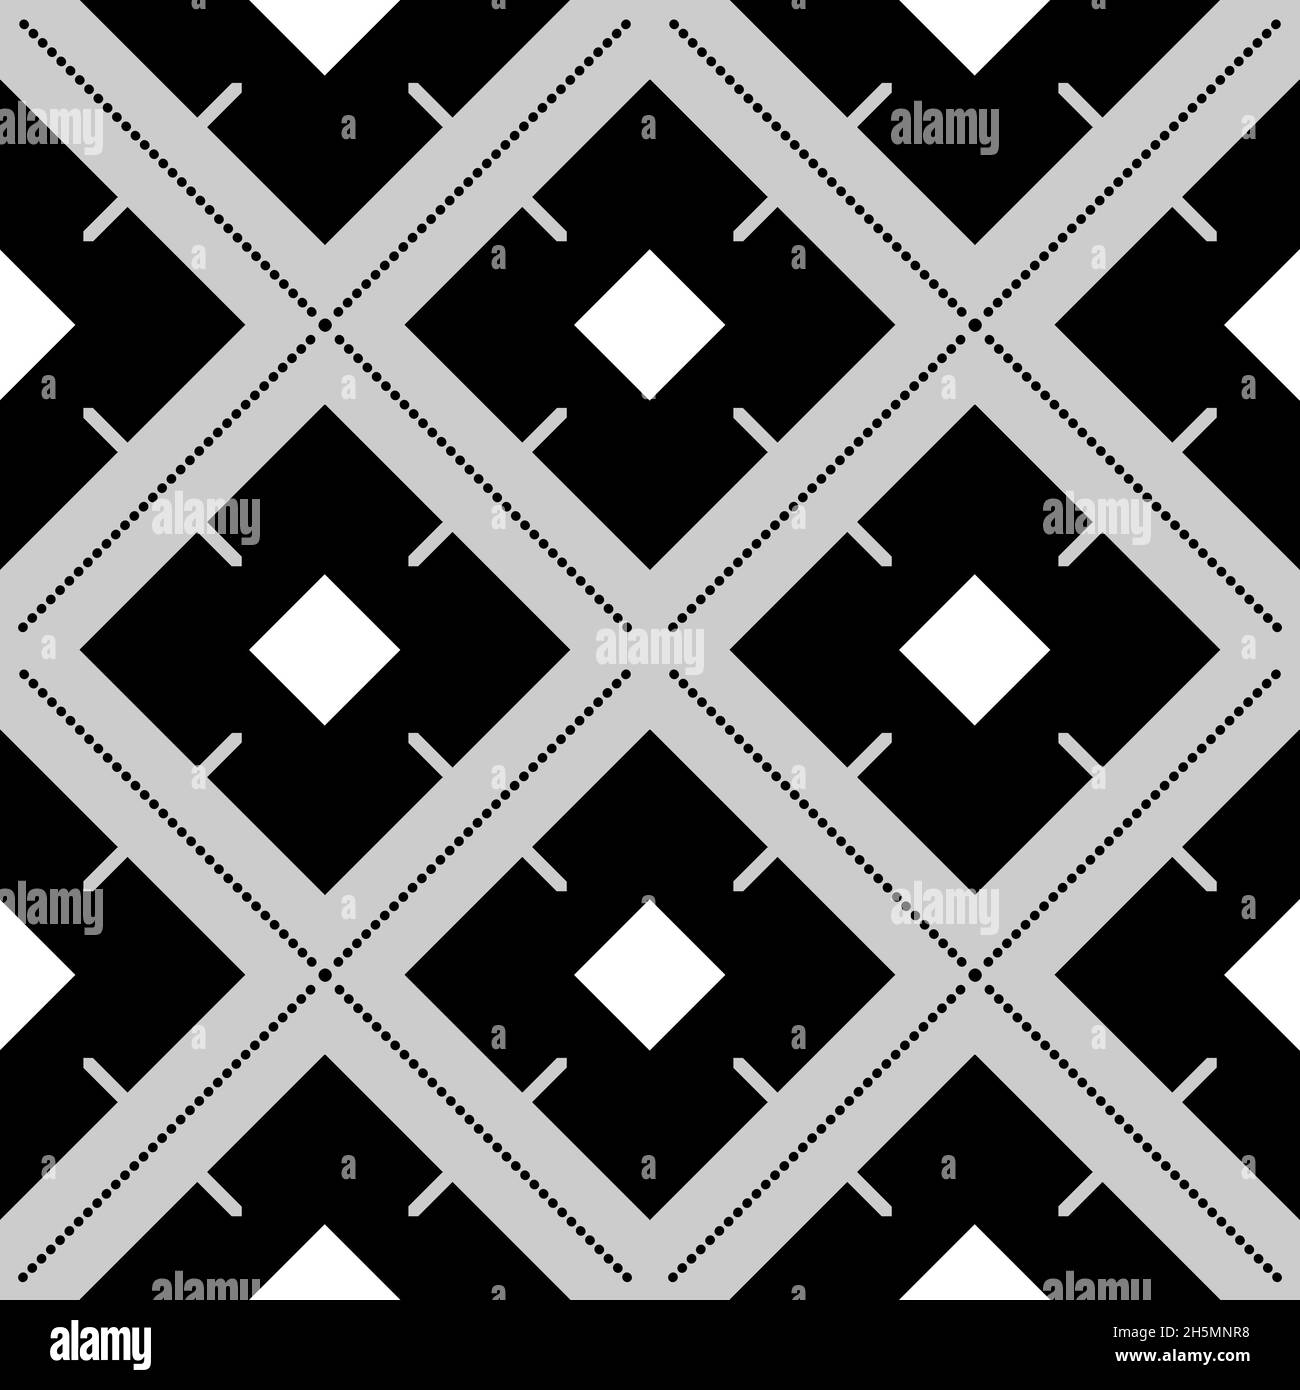 2D seamless wallpaper of black, gray and white lozenge shaped patterns Stock Photo